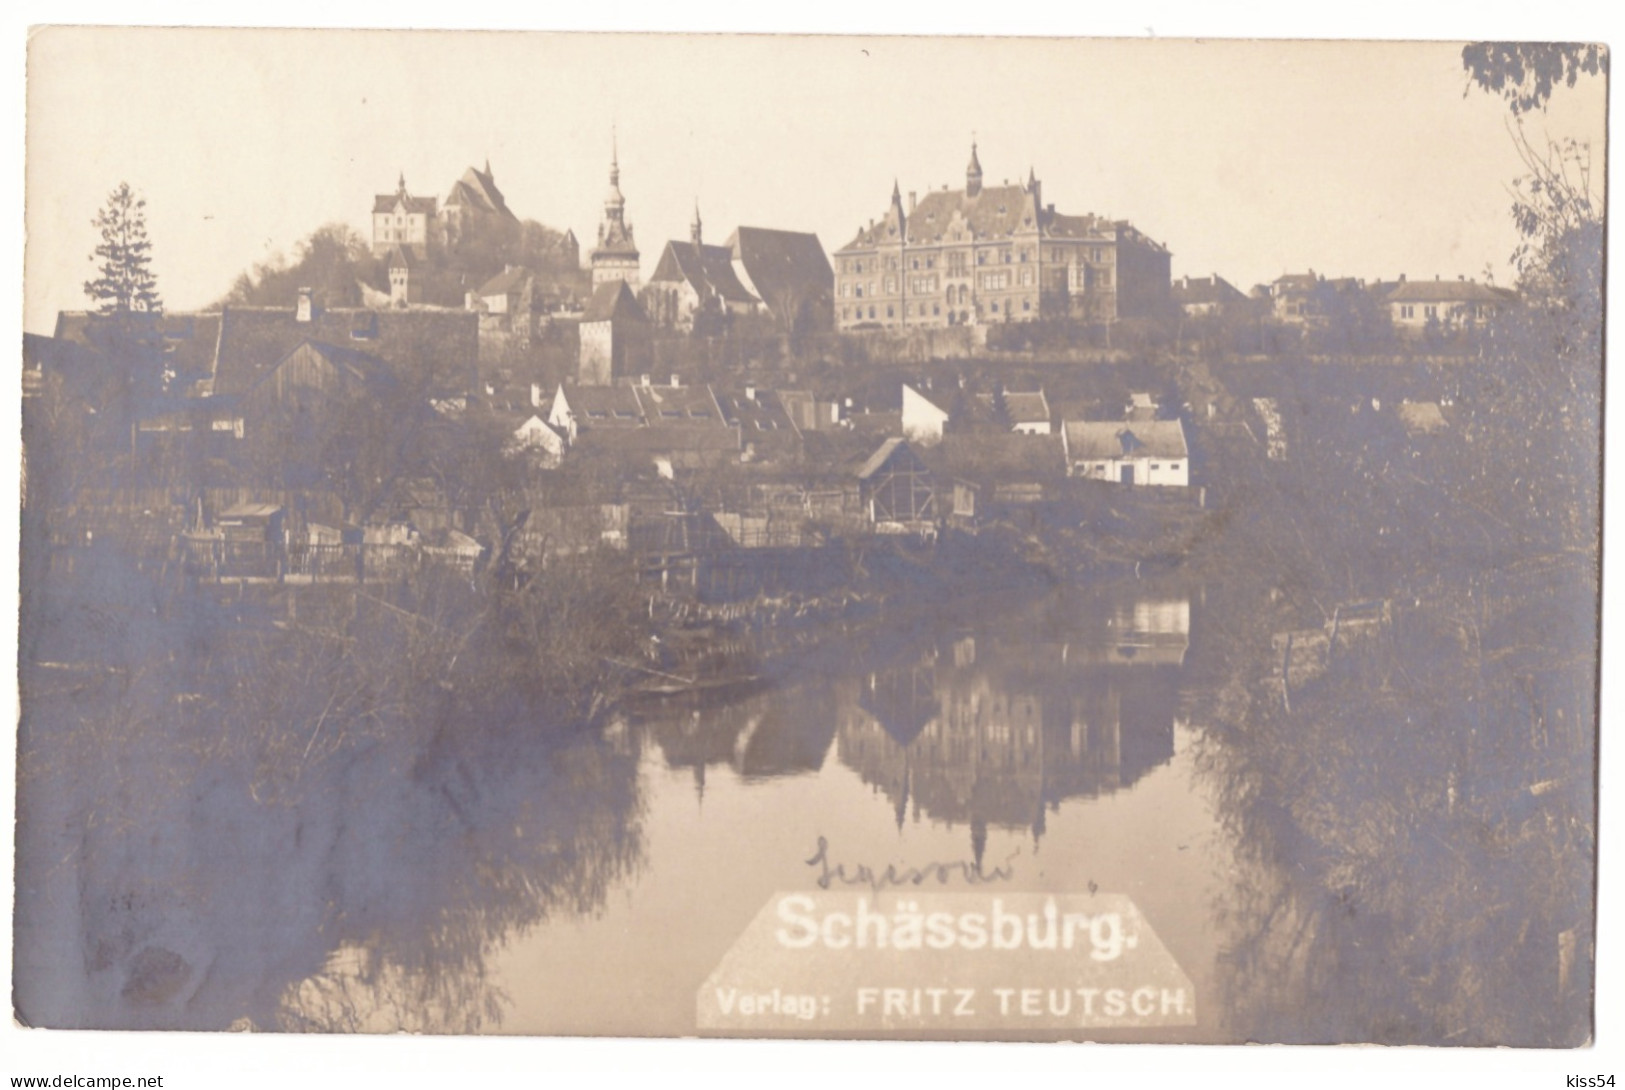 RO 38 - 18226 SIGHISOARA, Mures, Romania - Old Postcard, Real PHOTO - Used - 1913 - Roumanie